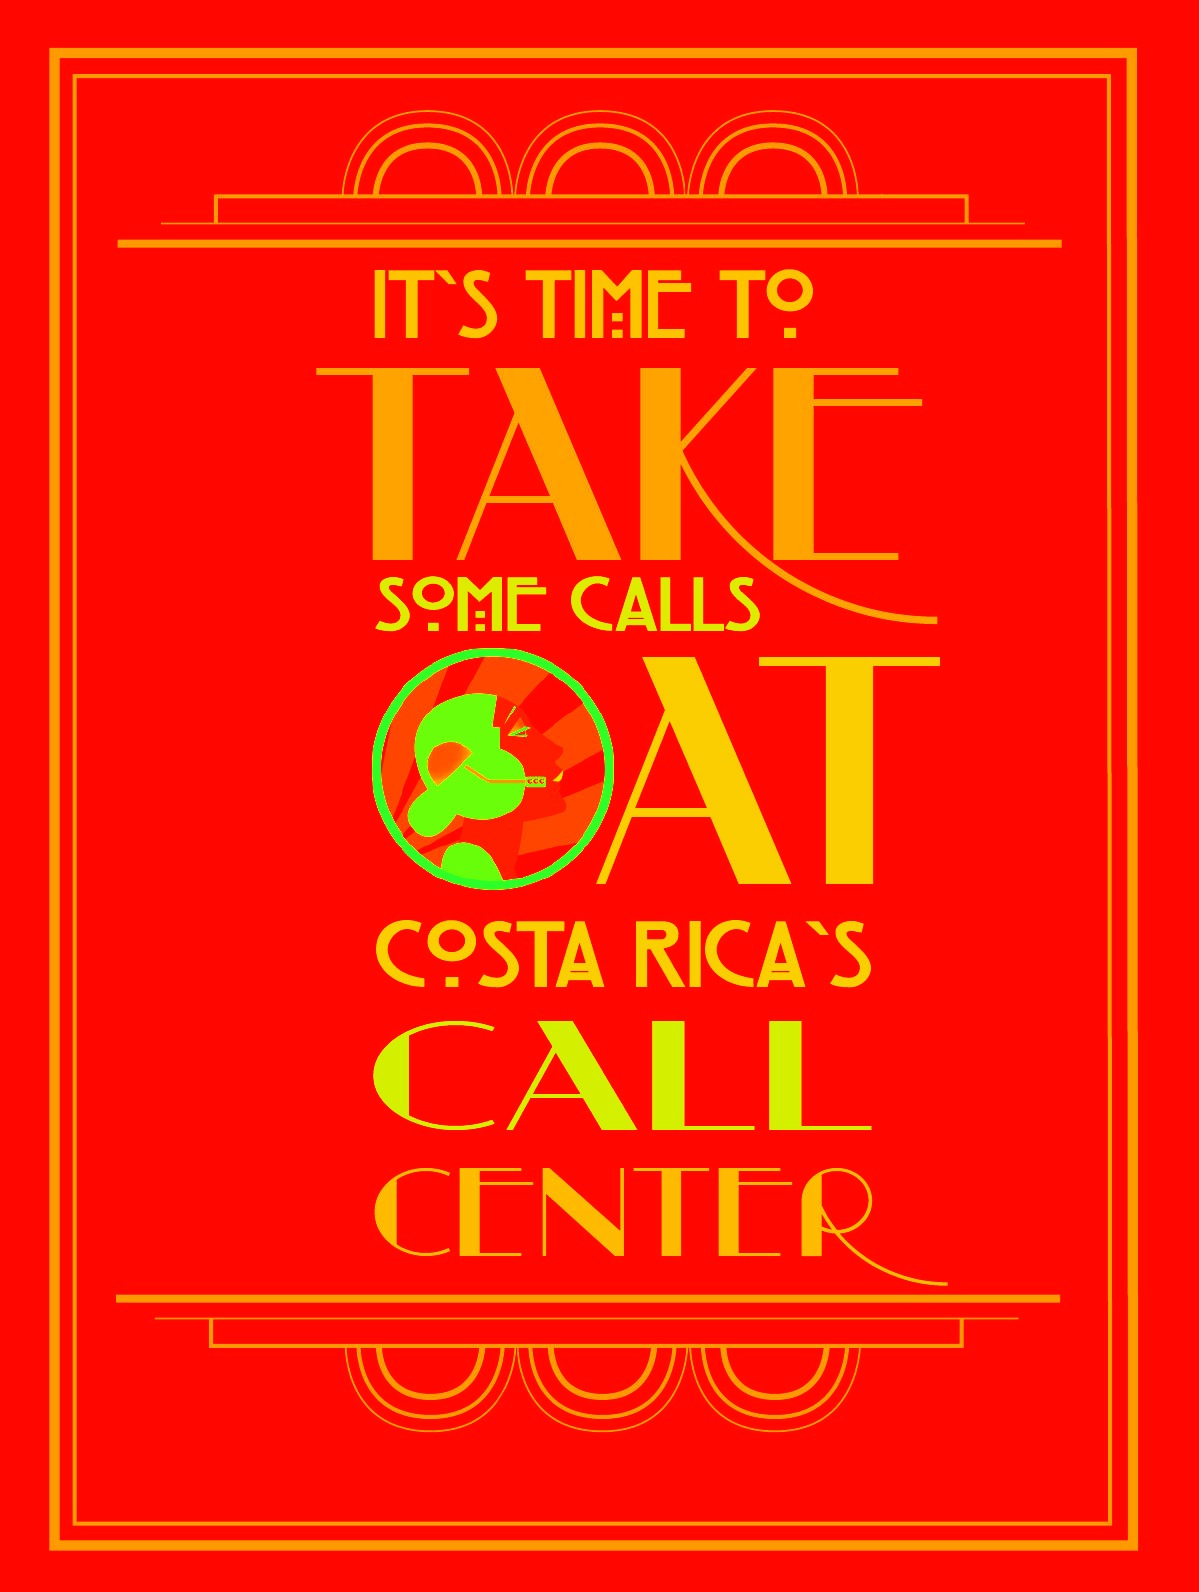 CALL CENTRE VENTURE COSTA RICA.jpg  by richardblank